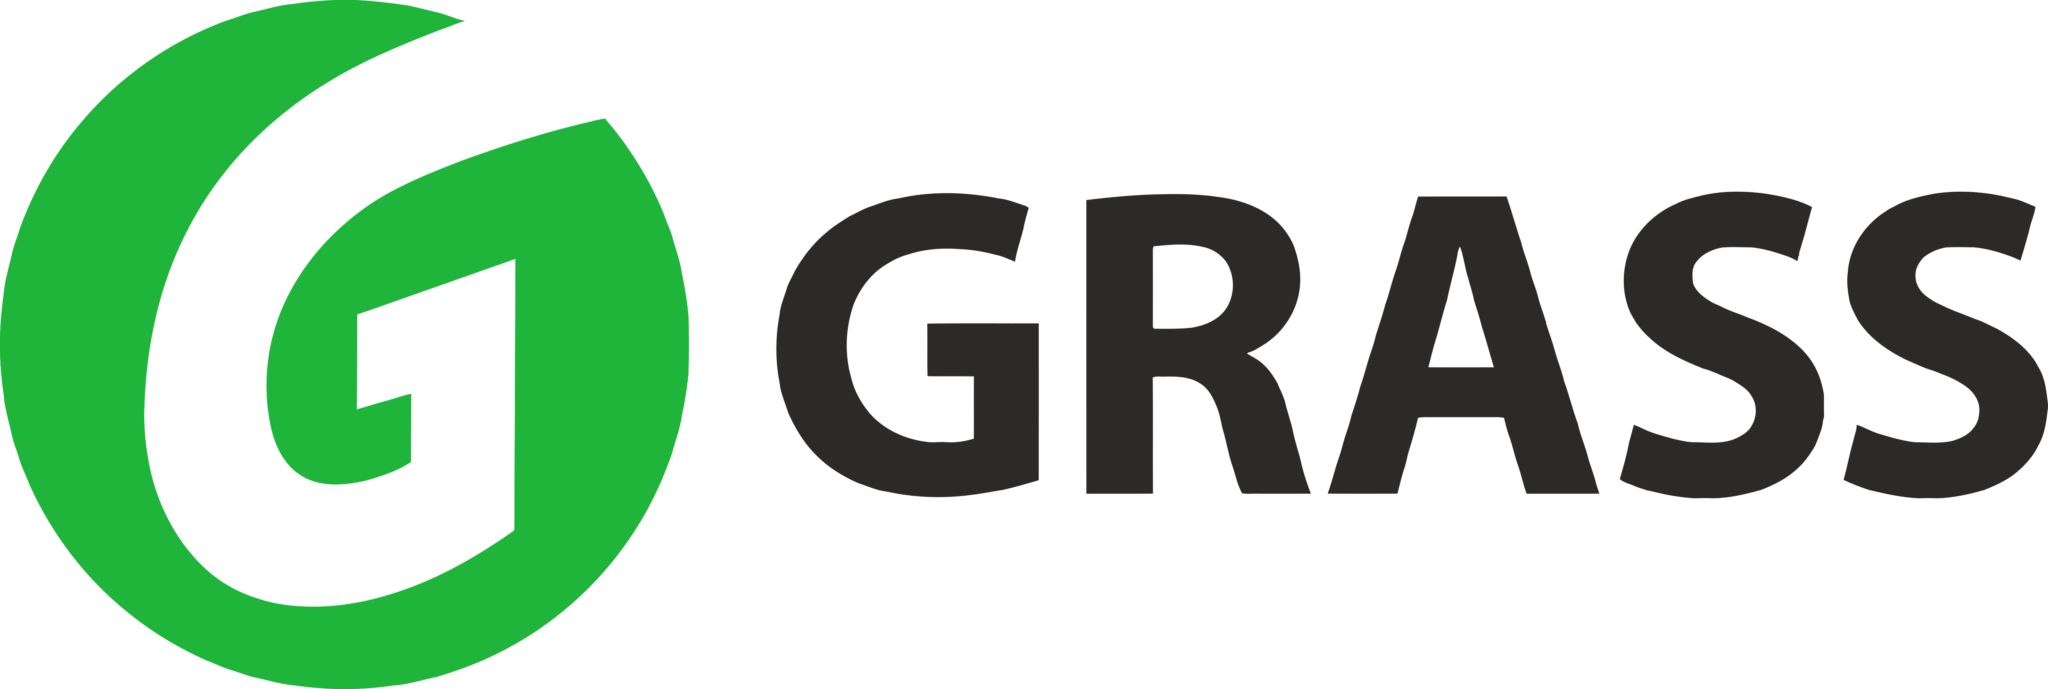 1 06 49. Значок Грасс. Grass автохимия логотип. Логотип Грасса. Грасс бытовая химия логотип.